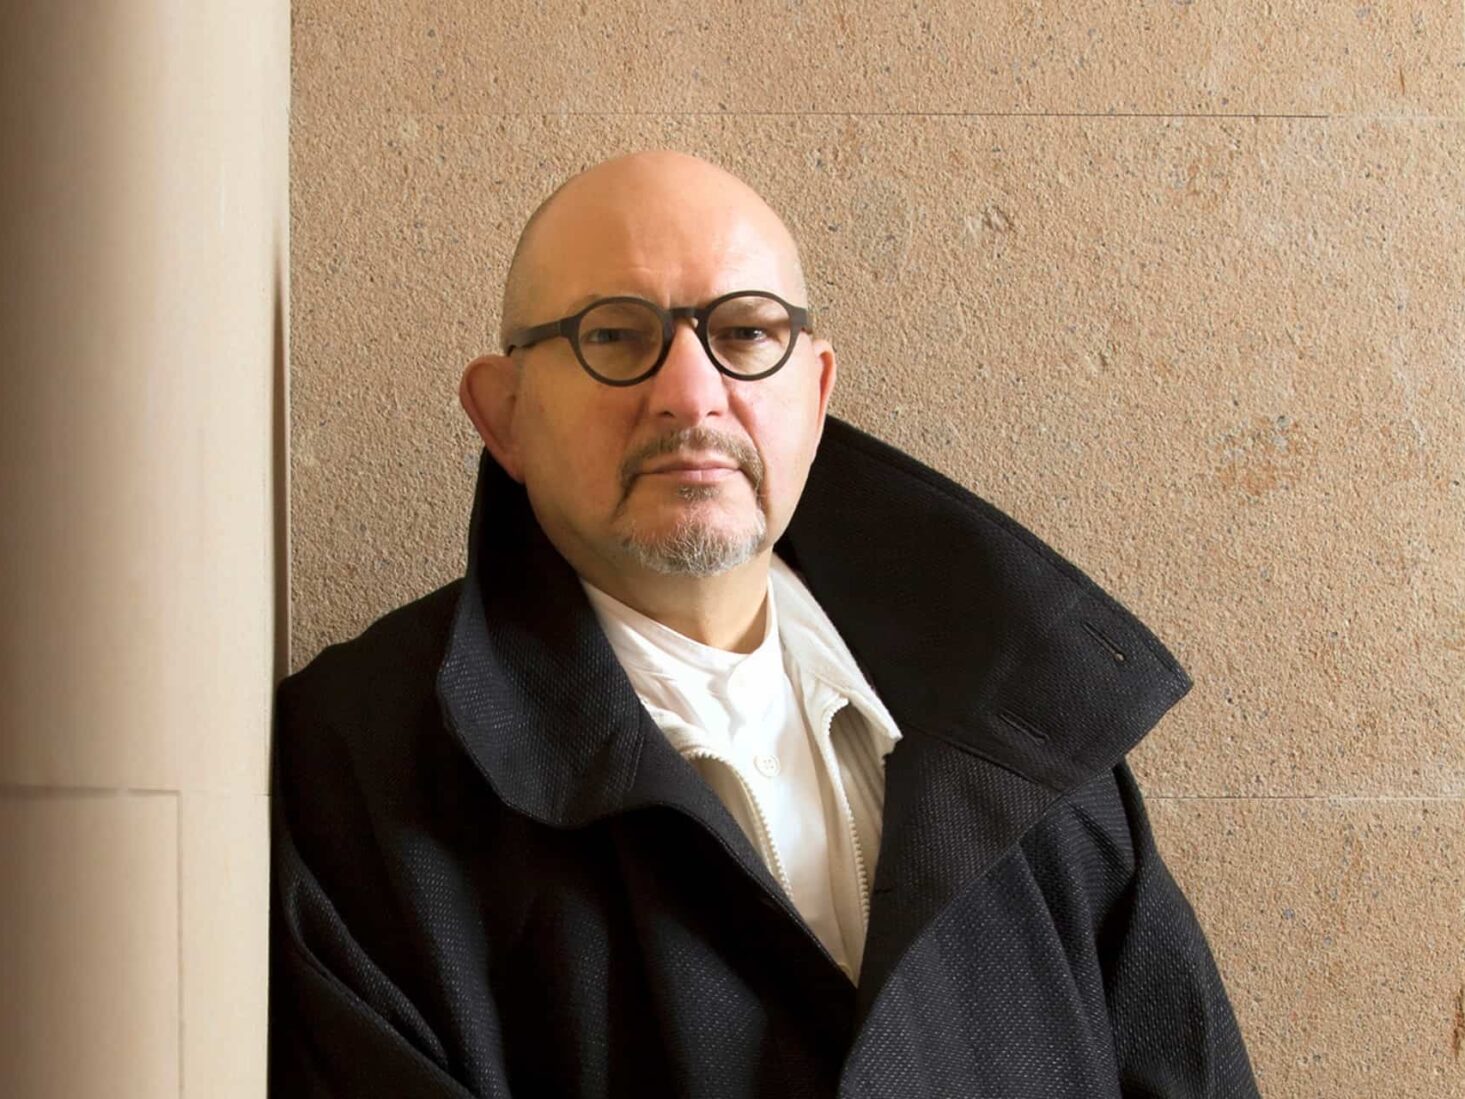 Claudio Silvestrin: The godfather of modern minimalism